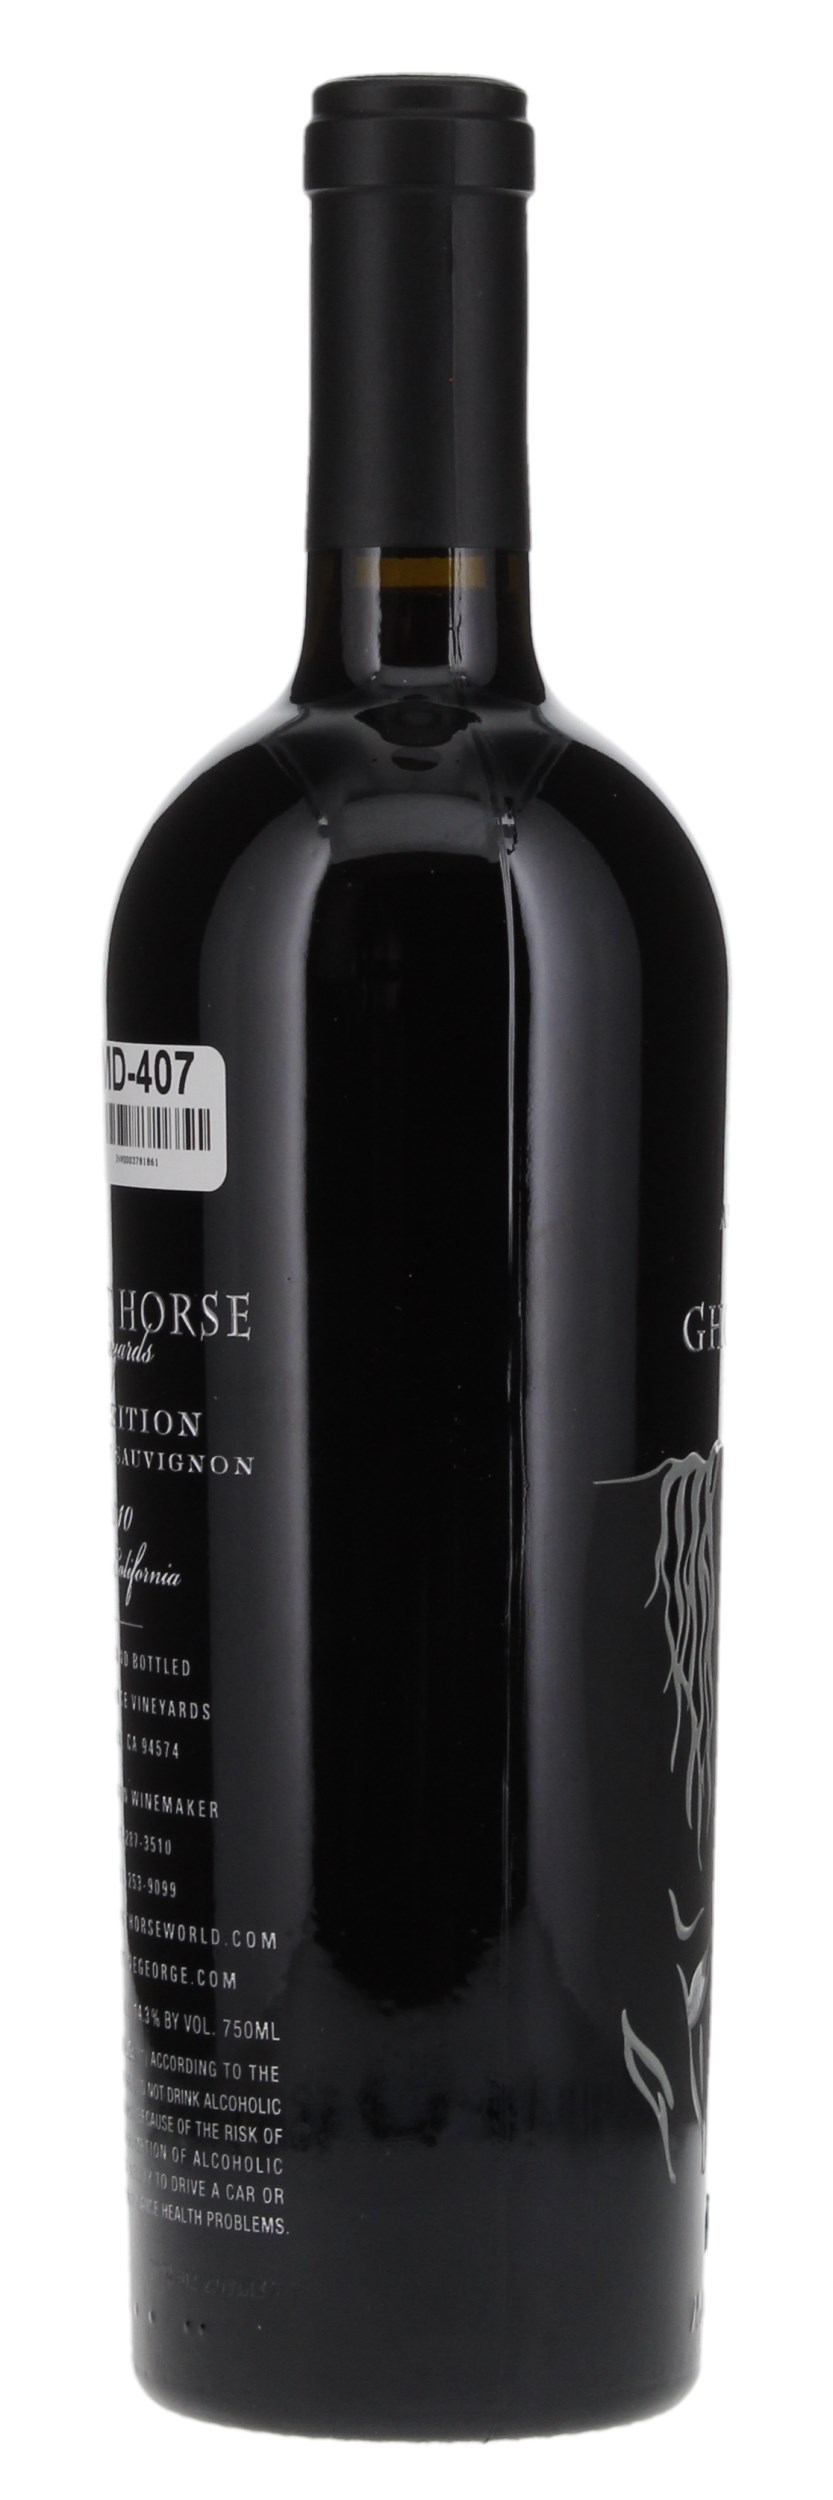 2010 Ghost Horse Vineyard Apparition Cabernet Sauvignon, 750ml